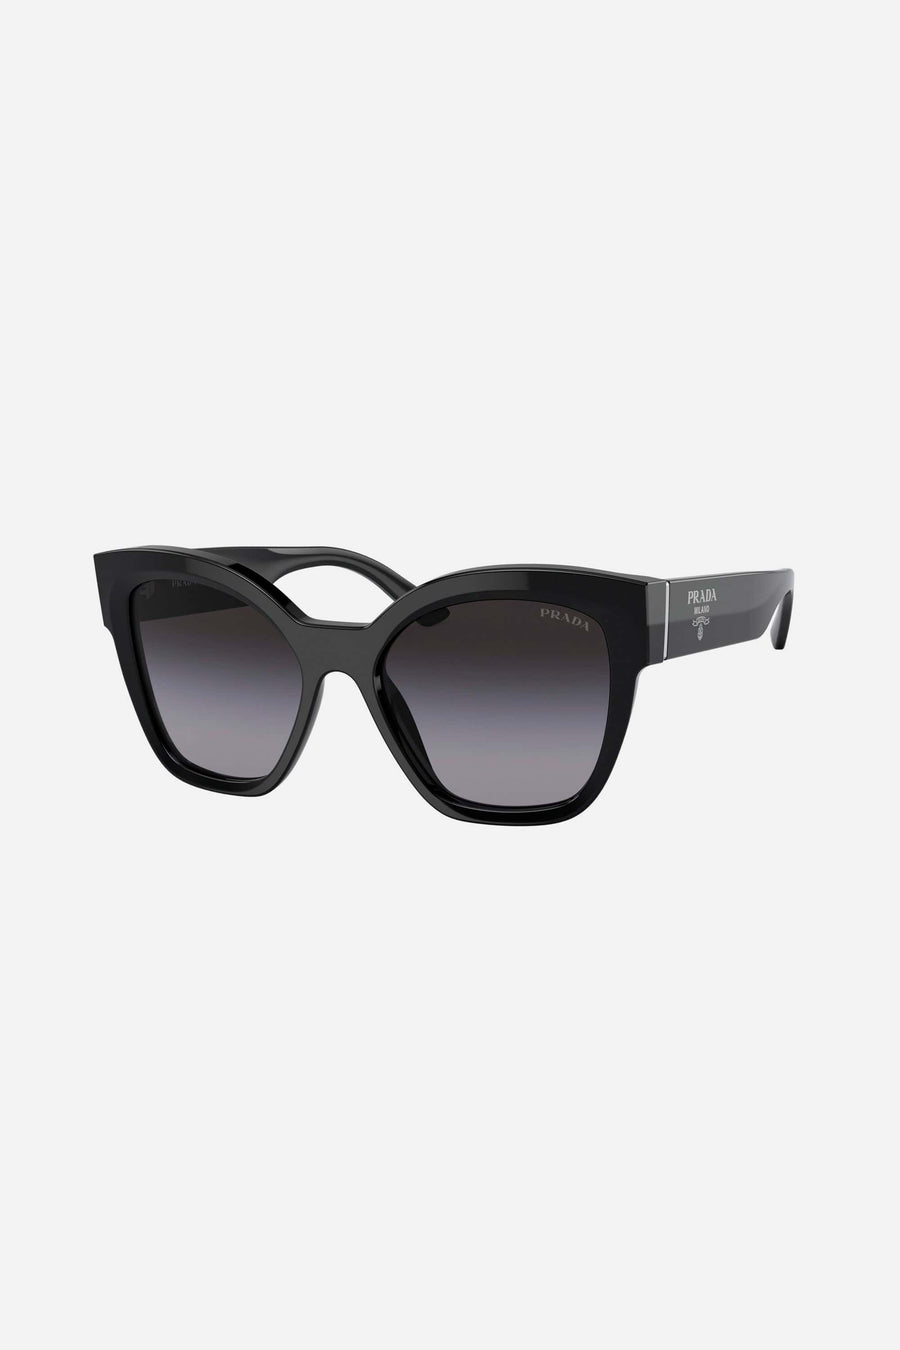 Prada black cat eye with brand logo sunglasses